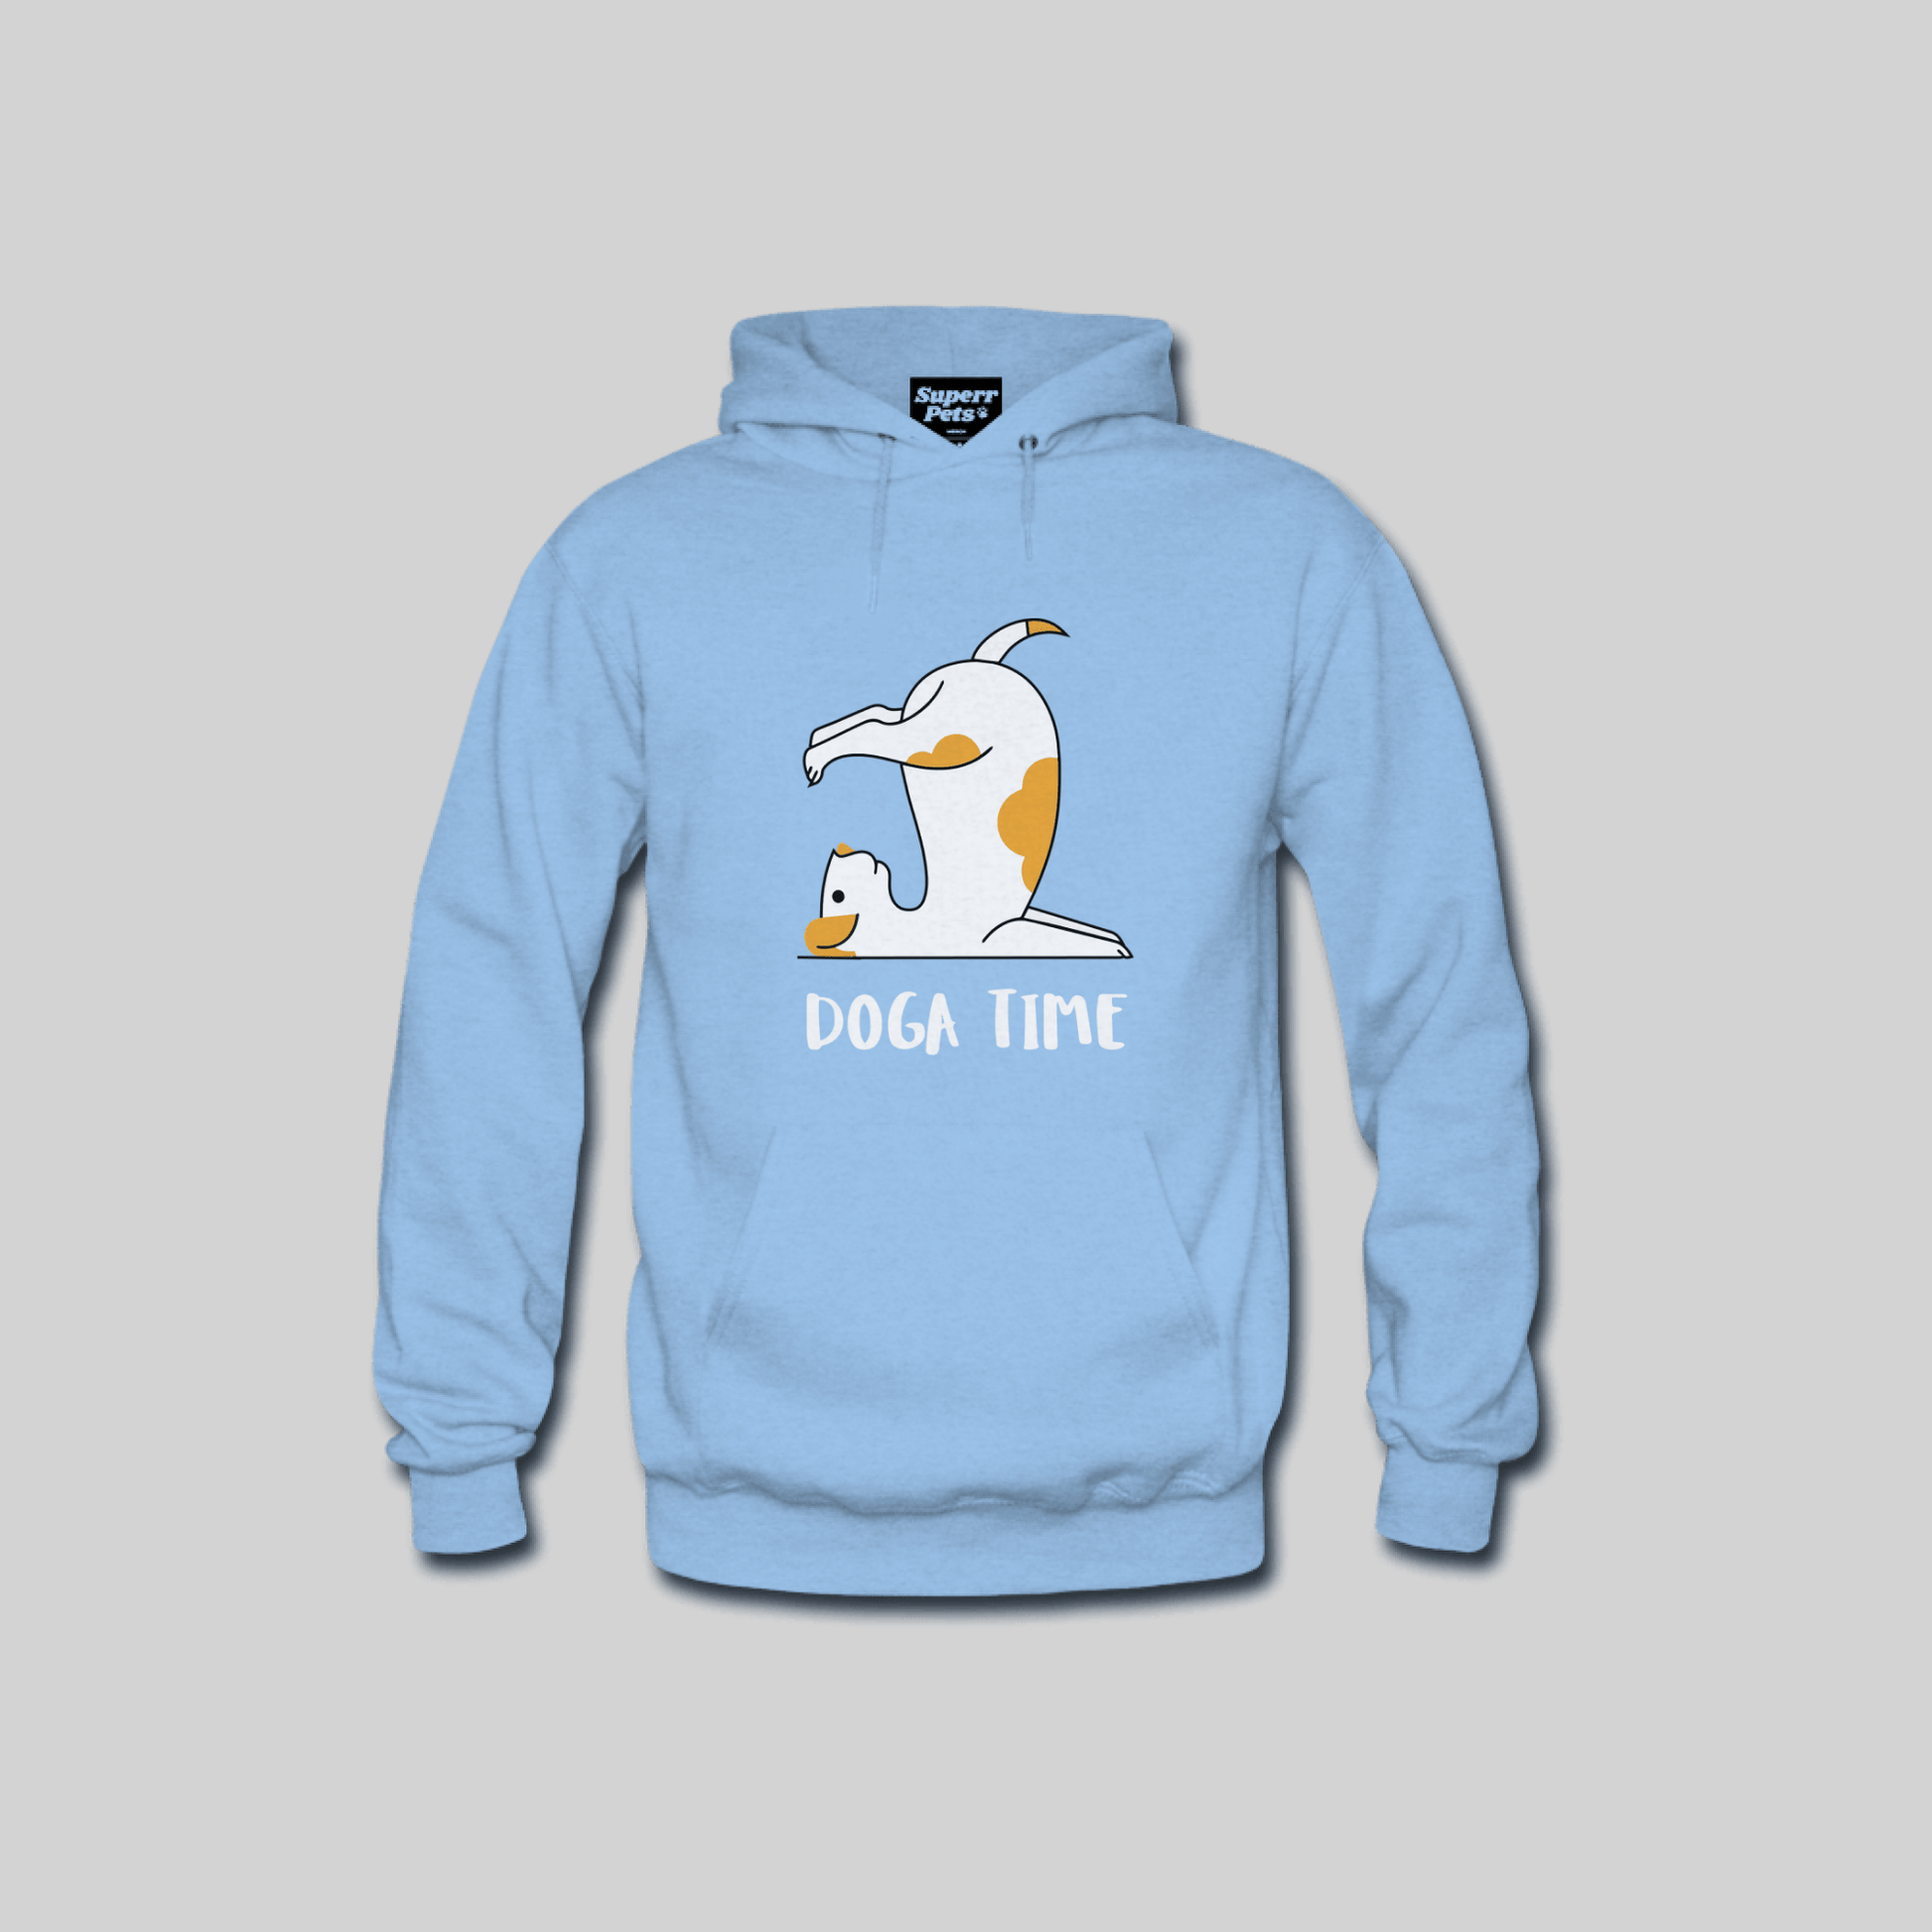 Superr Pets Hooded Sweatshirt Hooded Sweatshirt / Baby Blue / S Doga Time | Hooded Sweatshirt